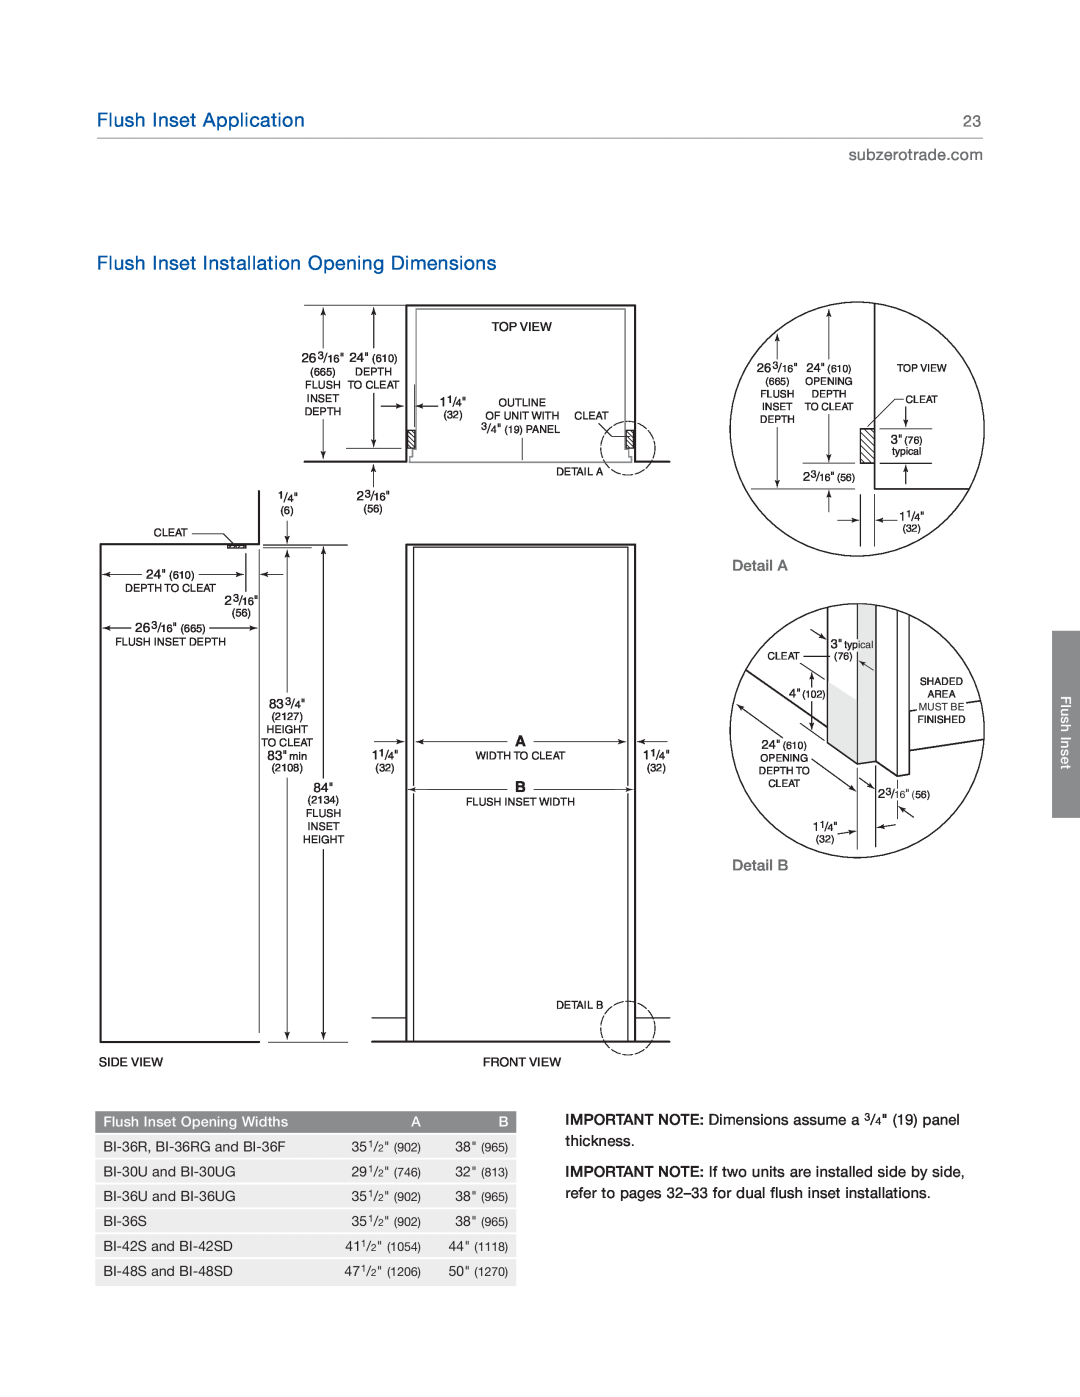 Sub-Zero BI-42S Flush Inset Installation Opening Dimensions, Flush Inset Application, subzerotrade.com, Detail A, Detail B 